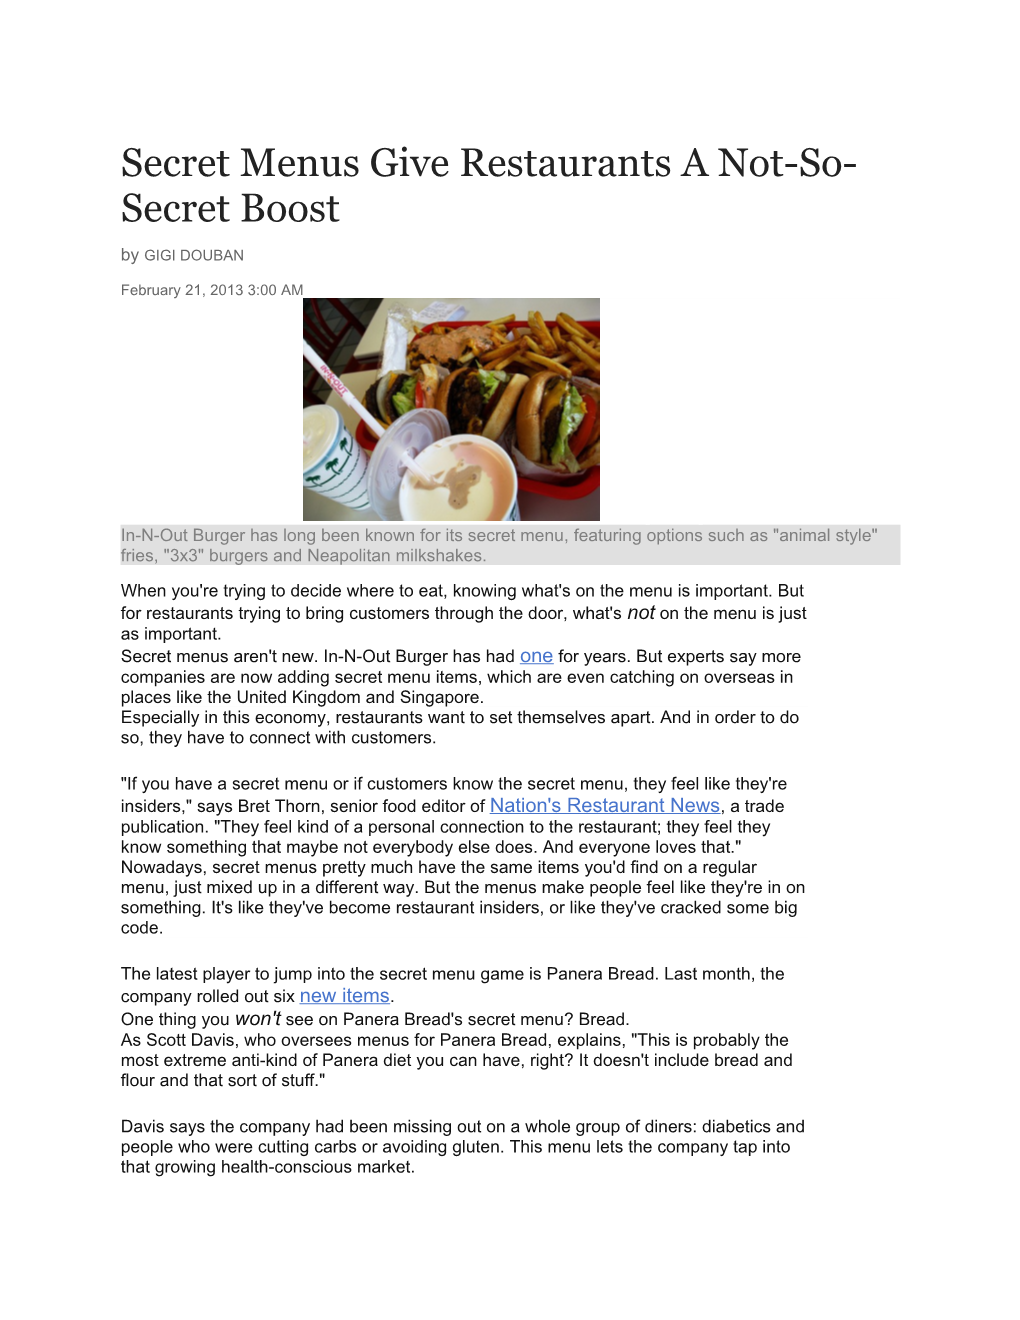 Secret Menus Give Restaurants a Not-So-Secret Boost